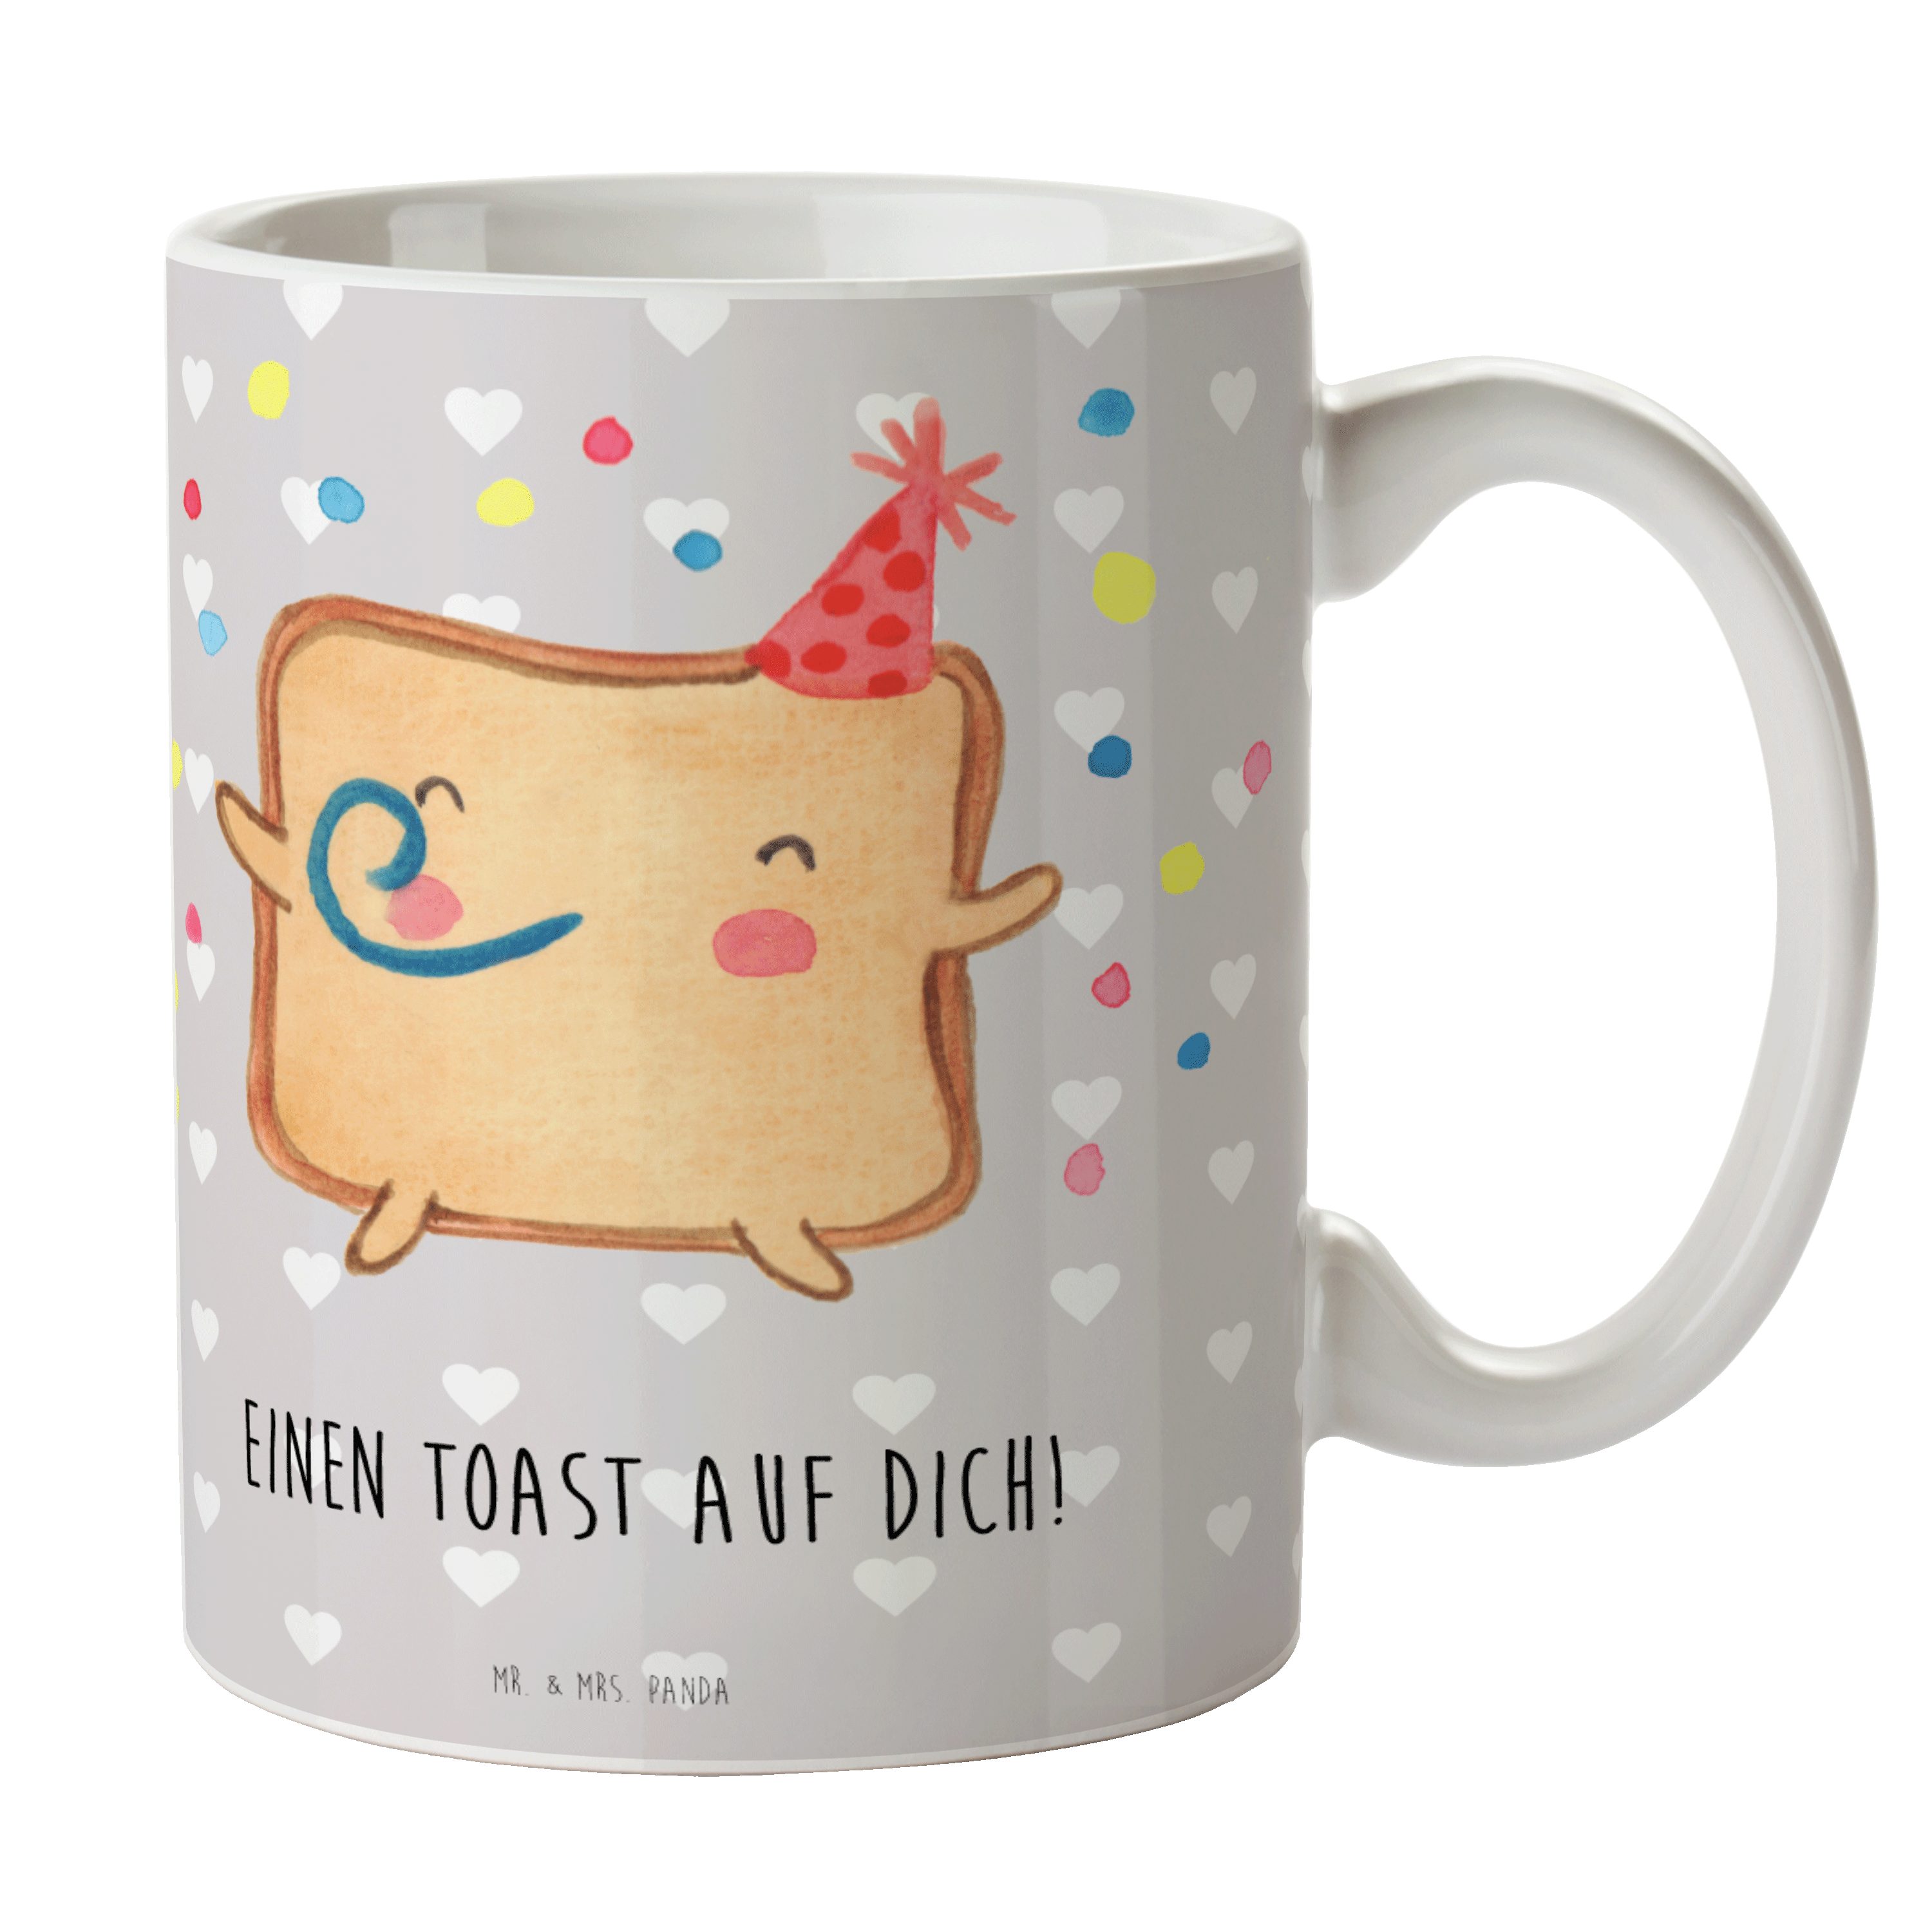 Mr. & Panda Porzellantasse, Mrs. Grau Kaffeet, Party Keramik Geschenk, Toast Tasse - - Liebe, Pastell